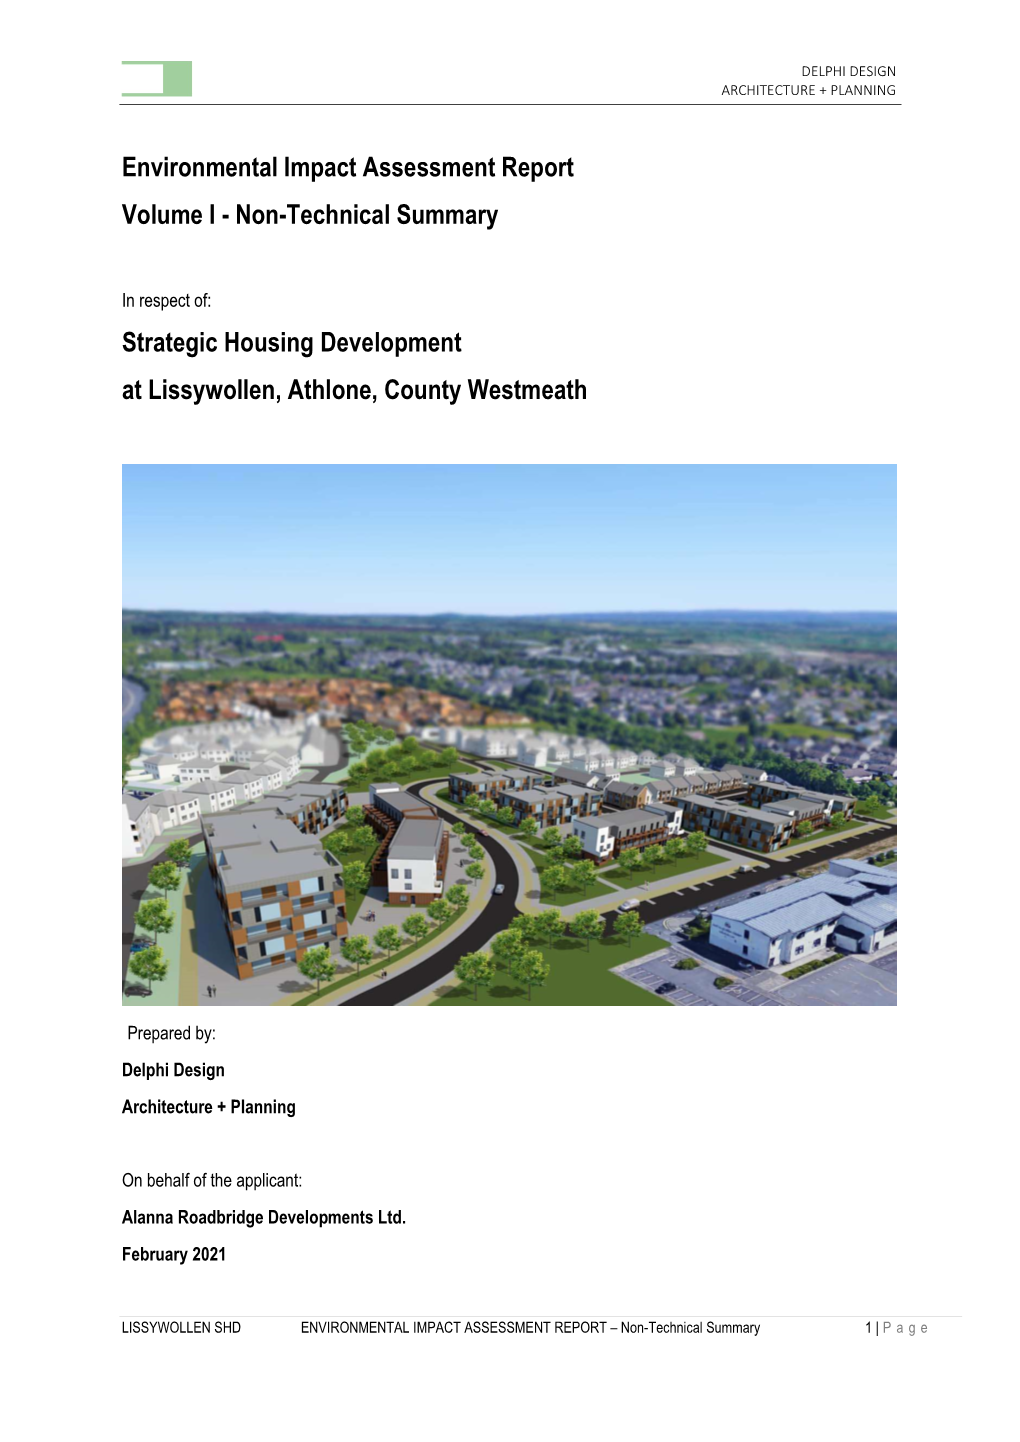 Environmental Impact Assessment Report Volume I - Non-Technical Summary